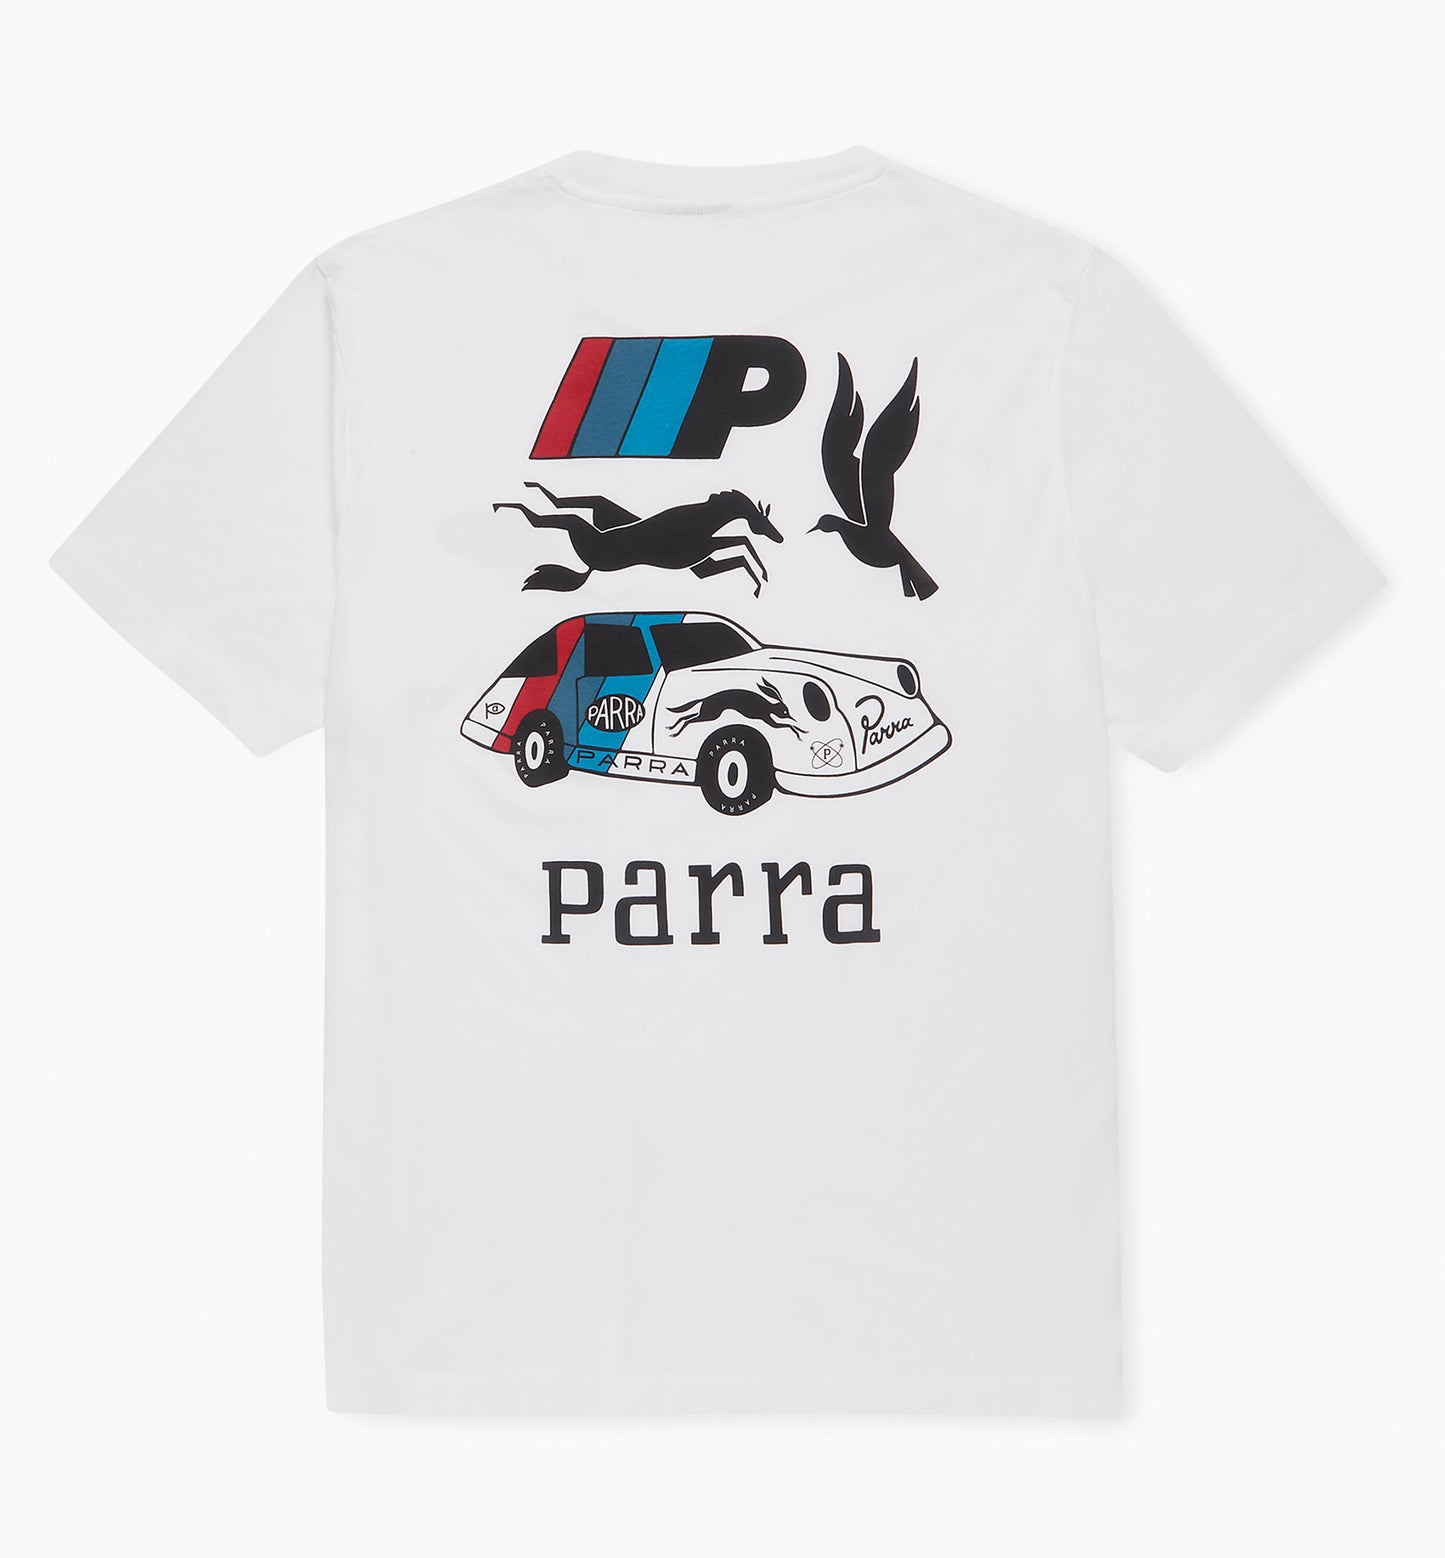 By Parra Racing Team T-Shirt